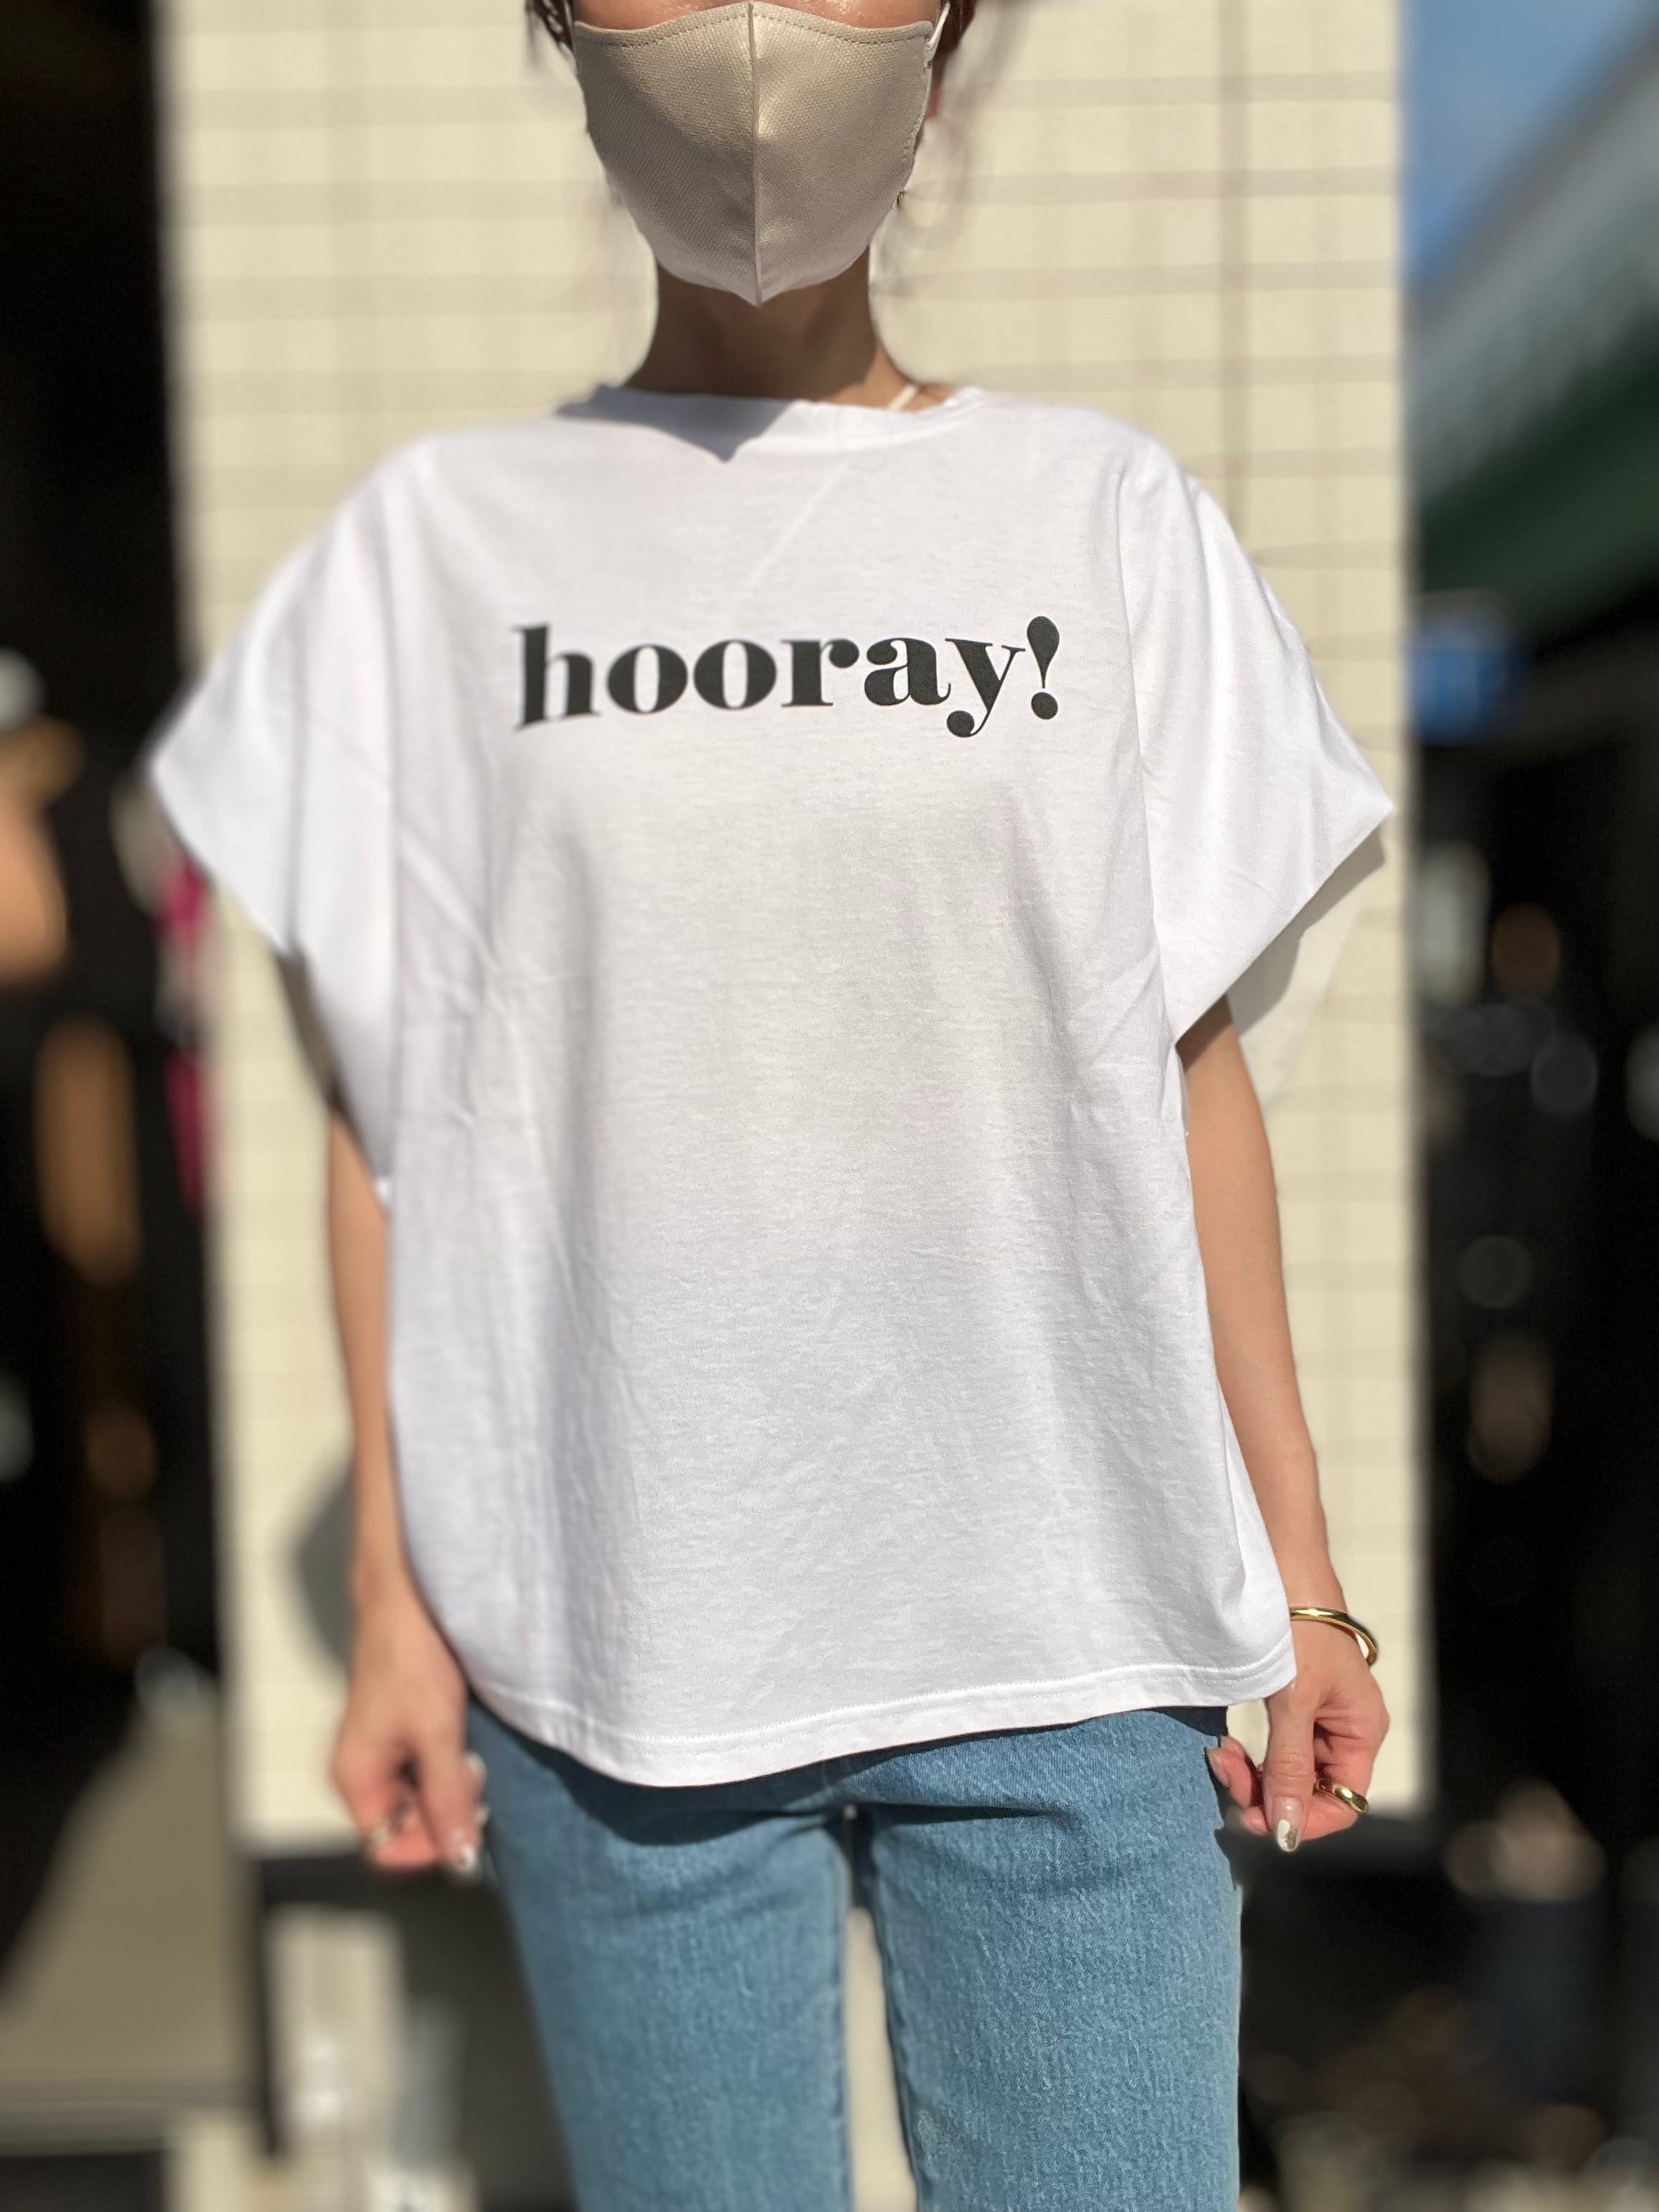 【Days】hooray!Tシャツ